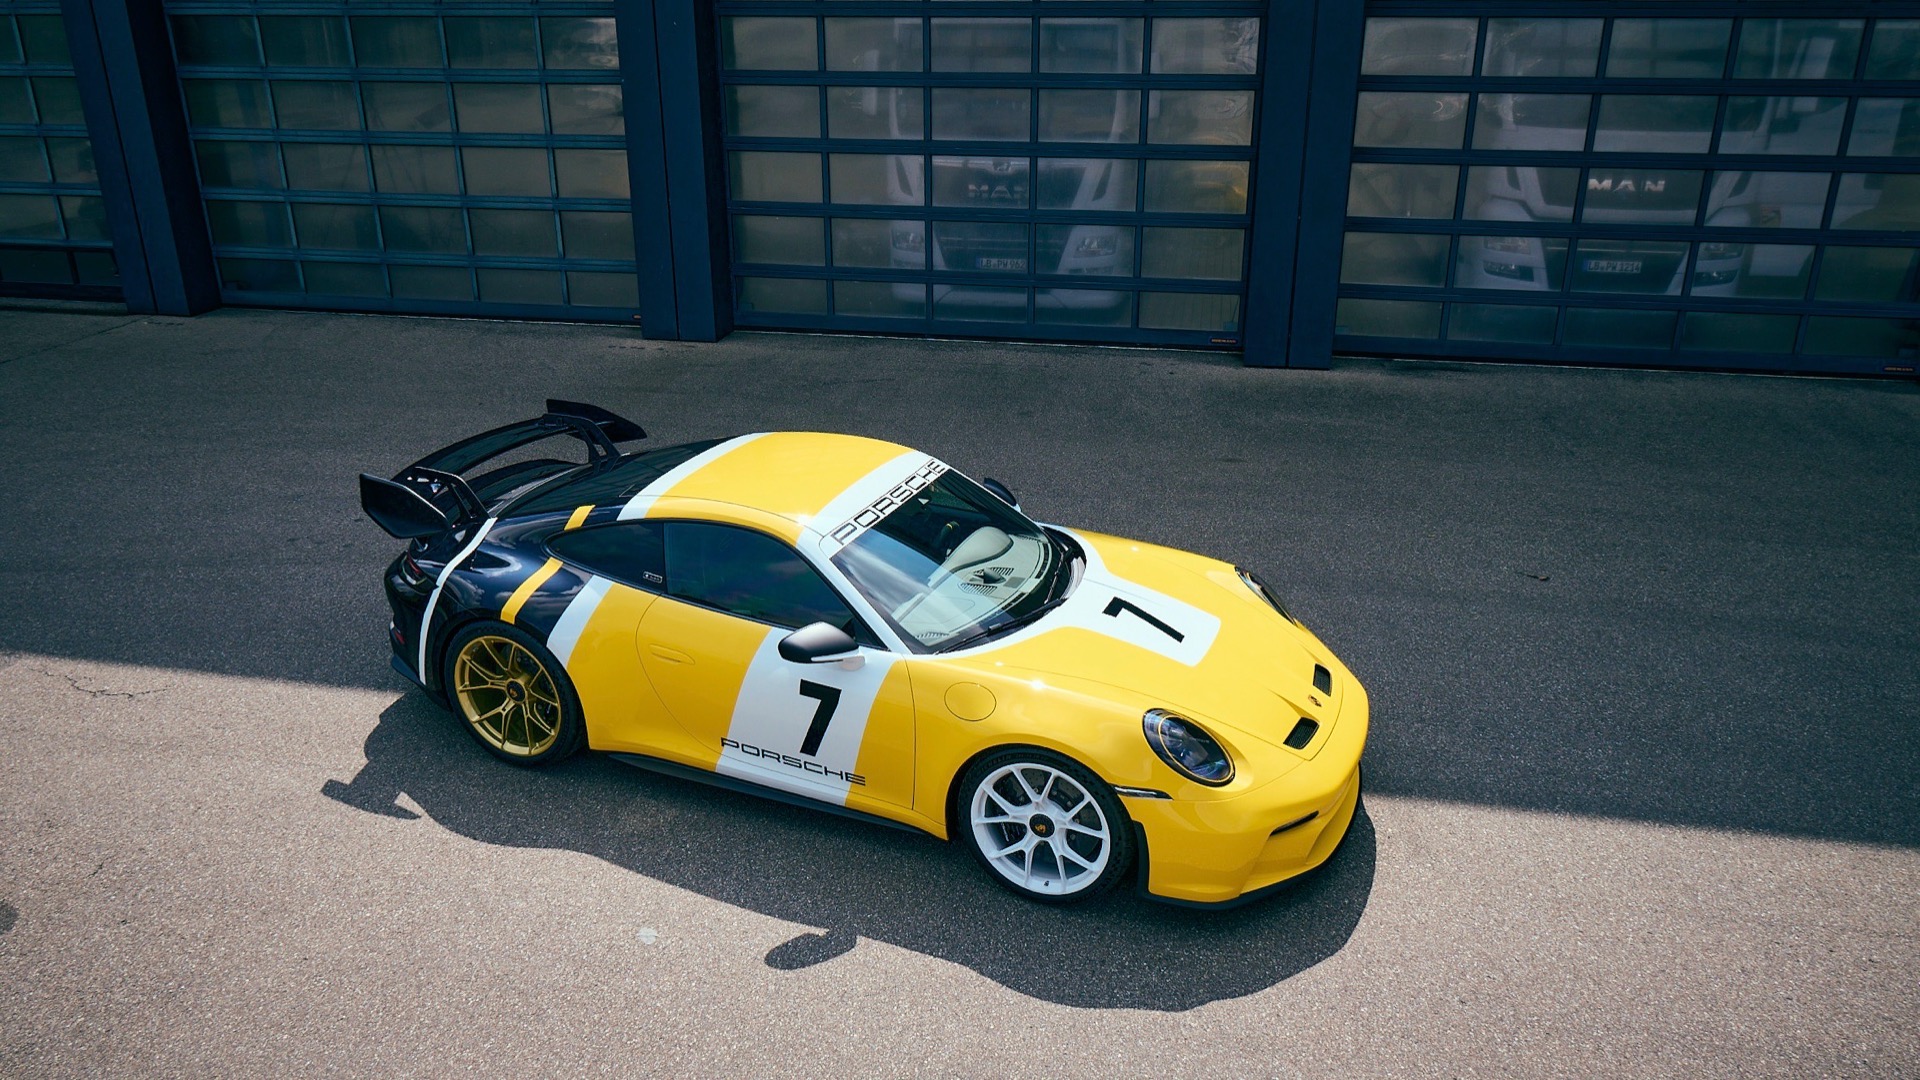 2022 Porsche 911 GT3 inspirado no Porsche 956 vencedor de Le Mans em 1985